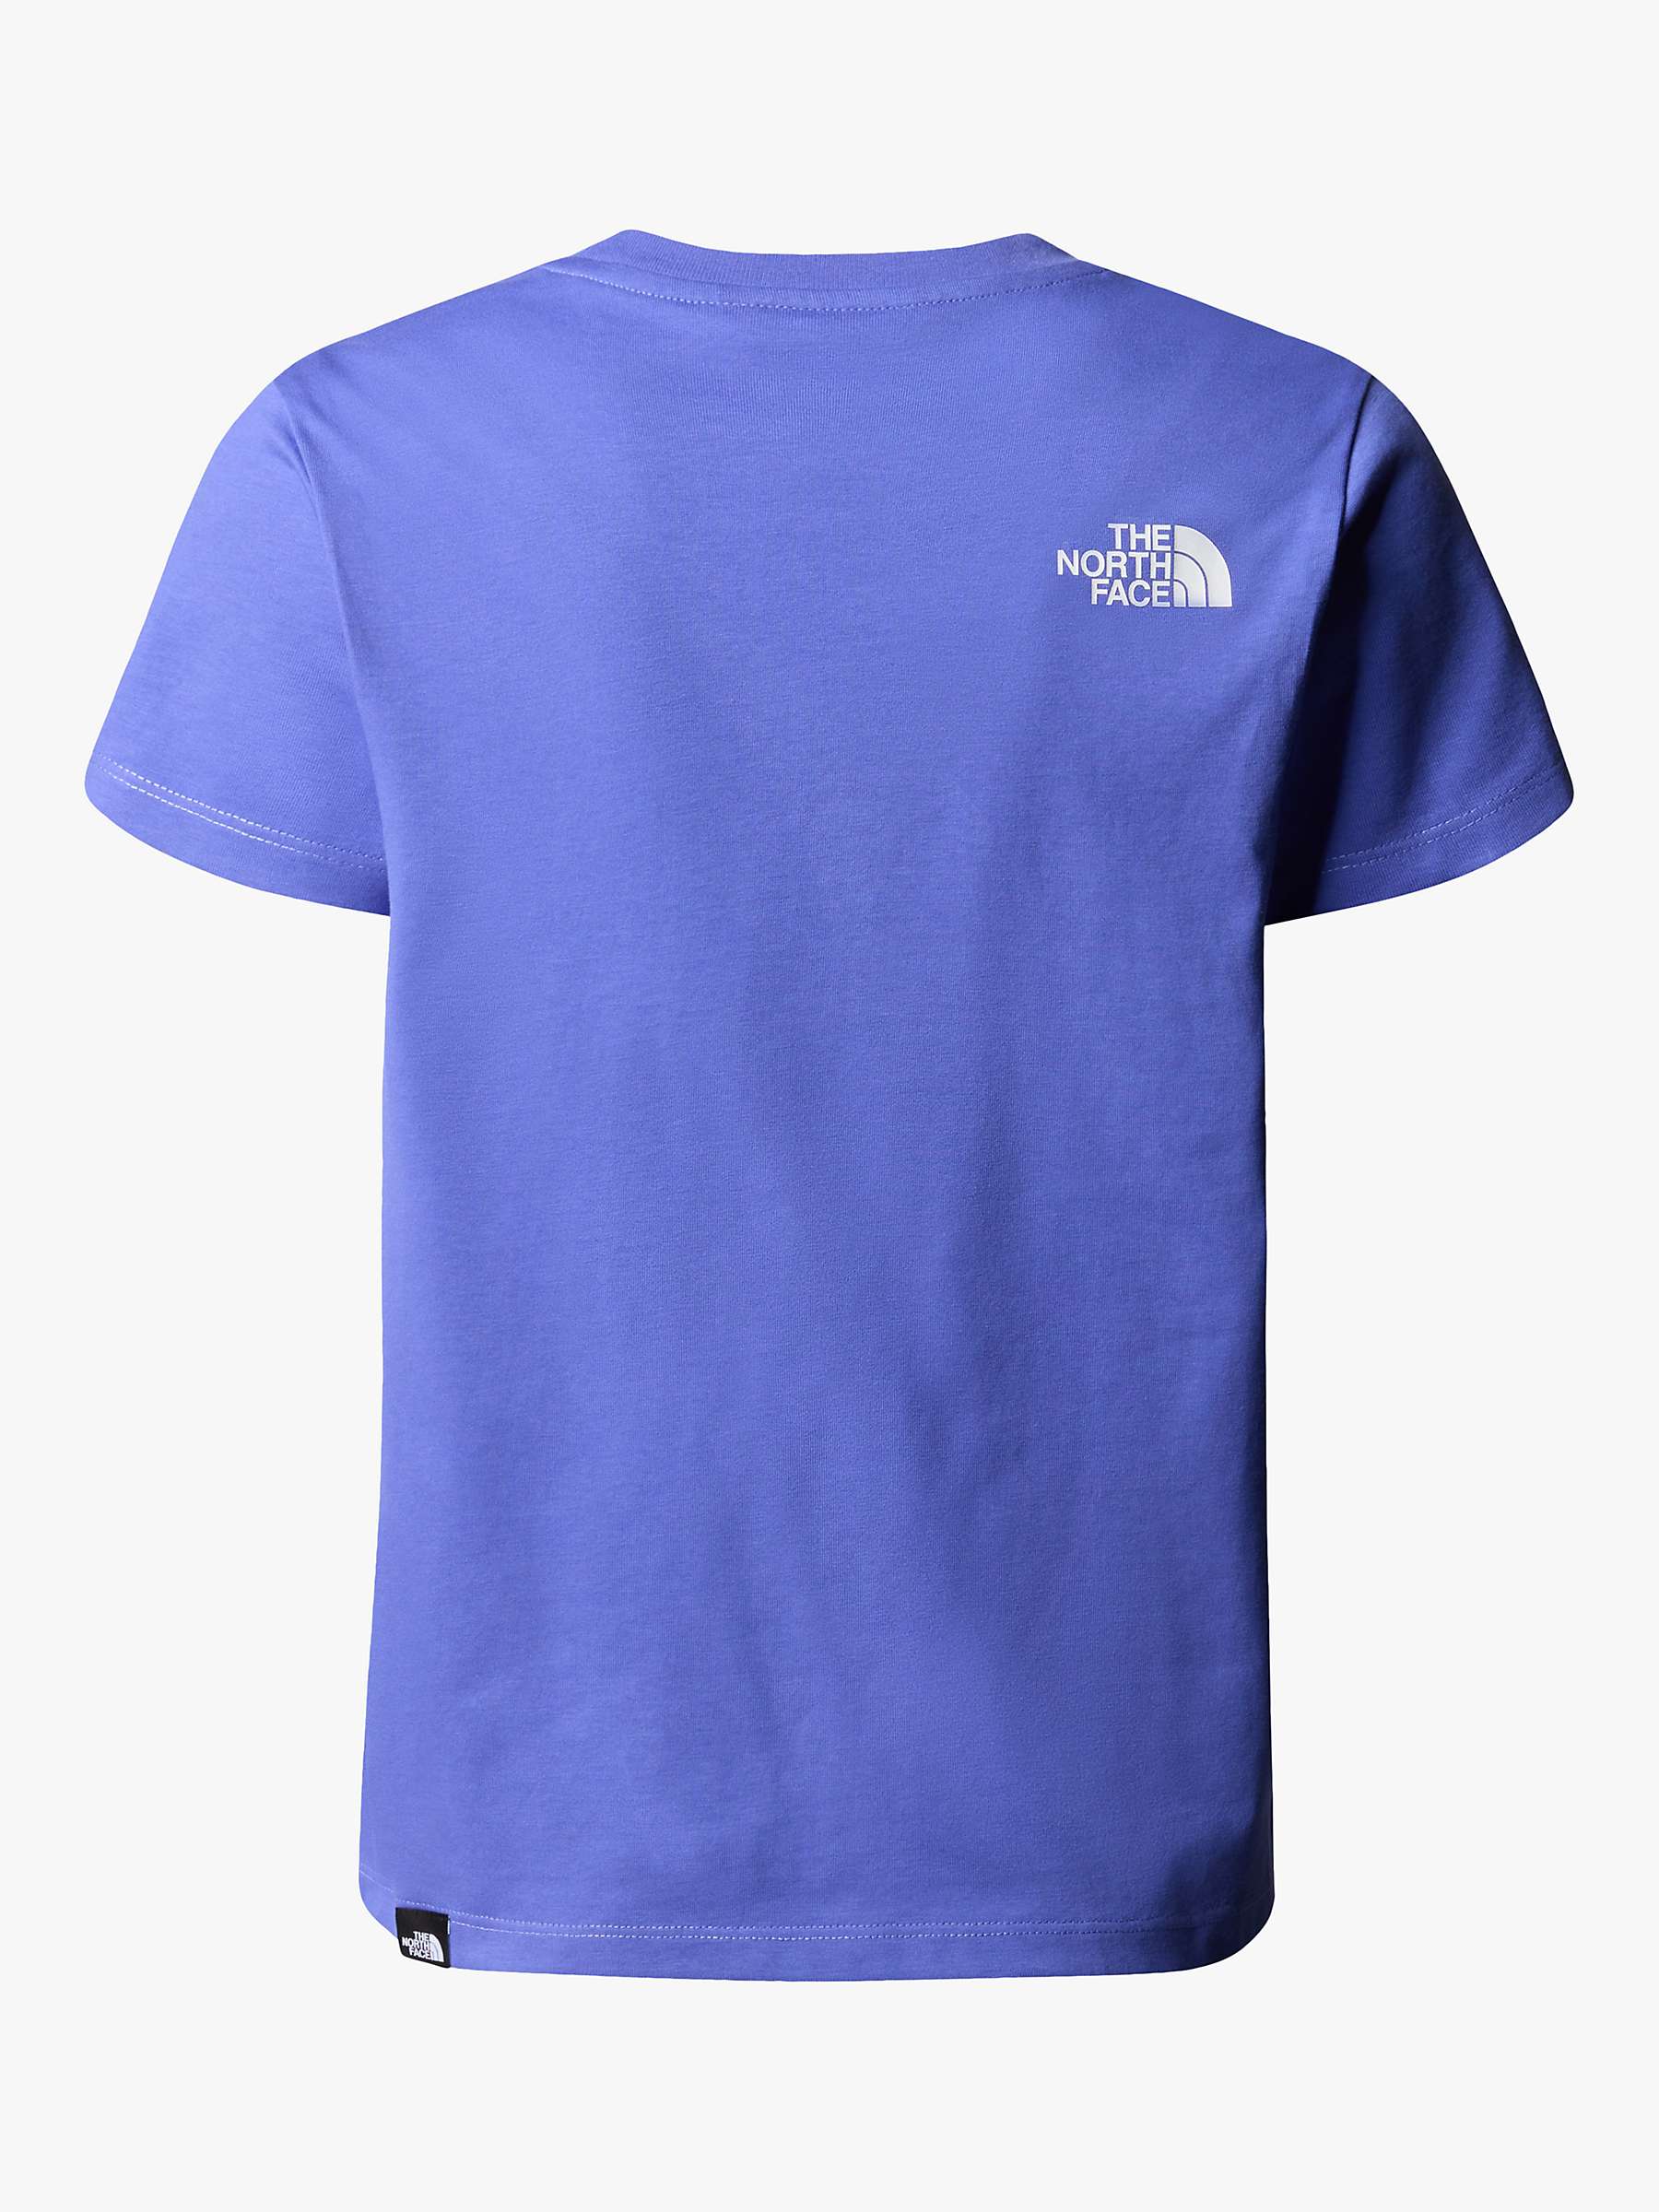 Buy The North Face Kids' Easy Logo Short Sleeve T-Shirt, Dopamine Blue Online at johnlewis.com